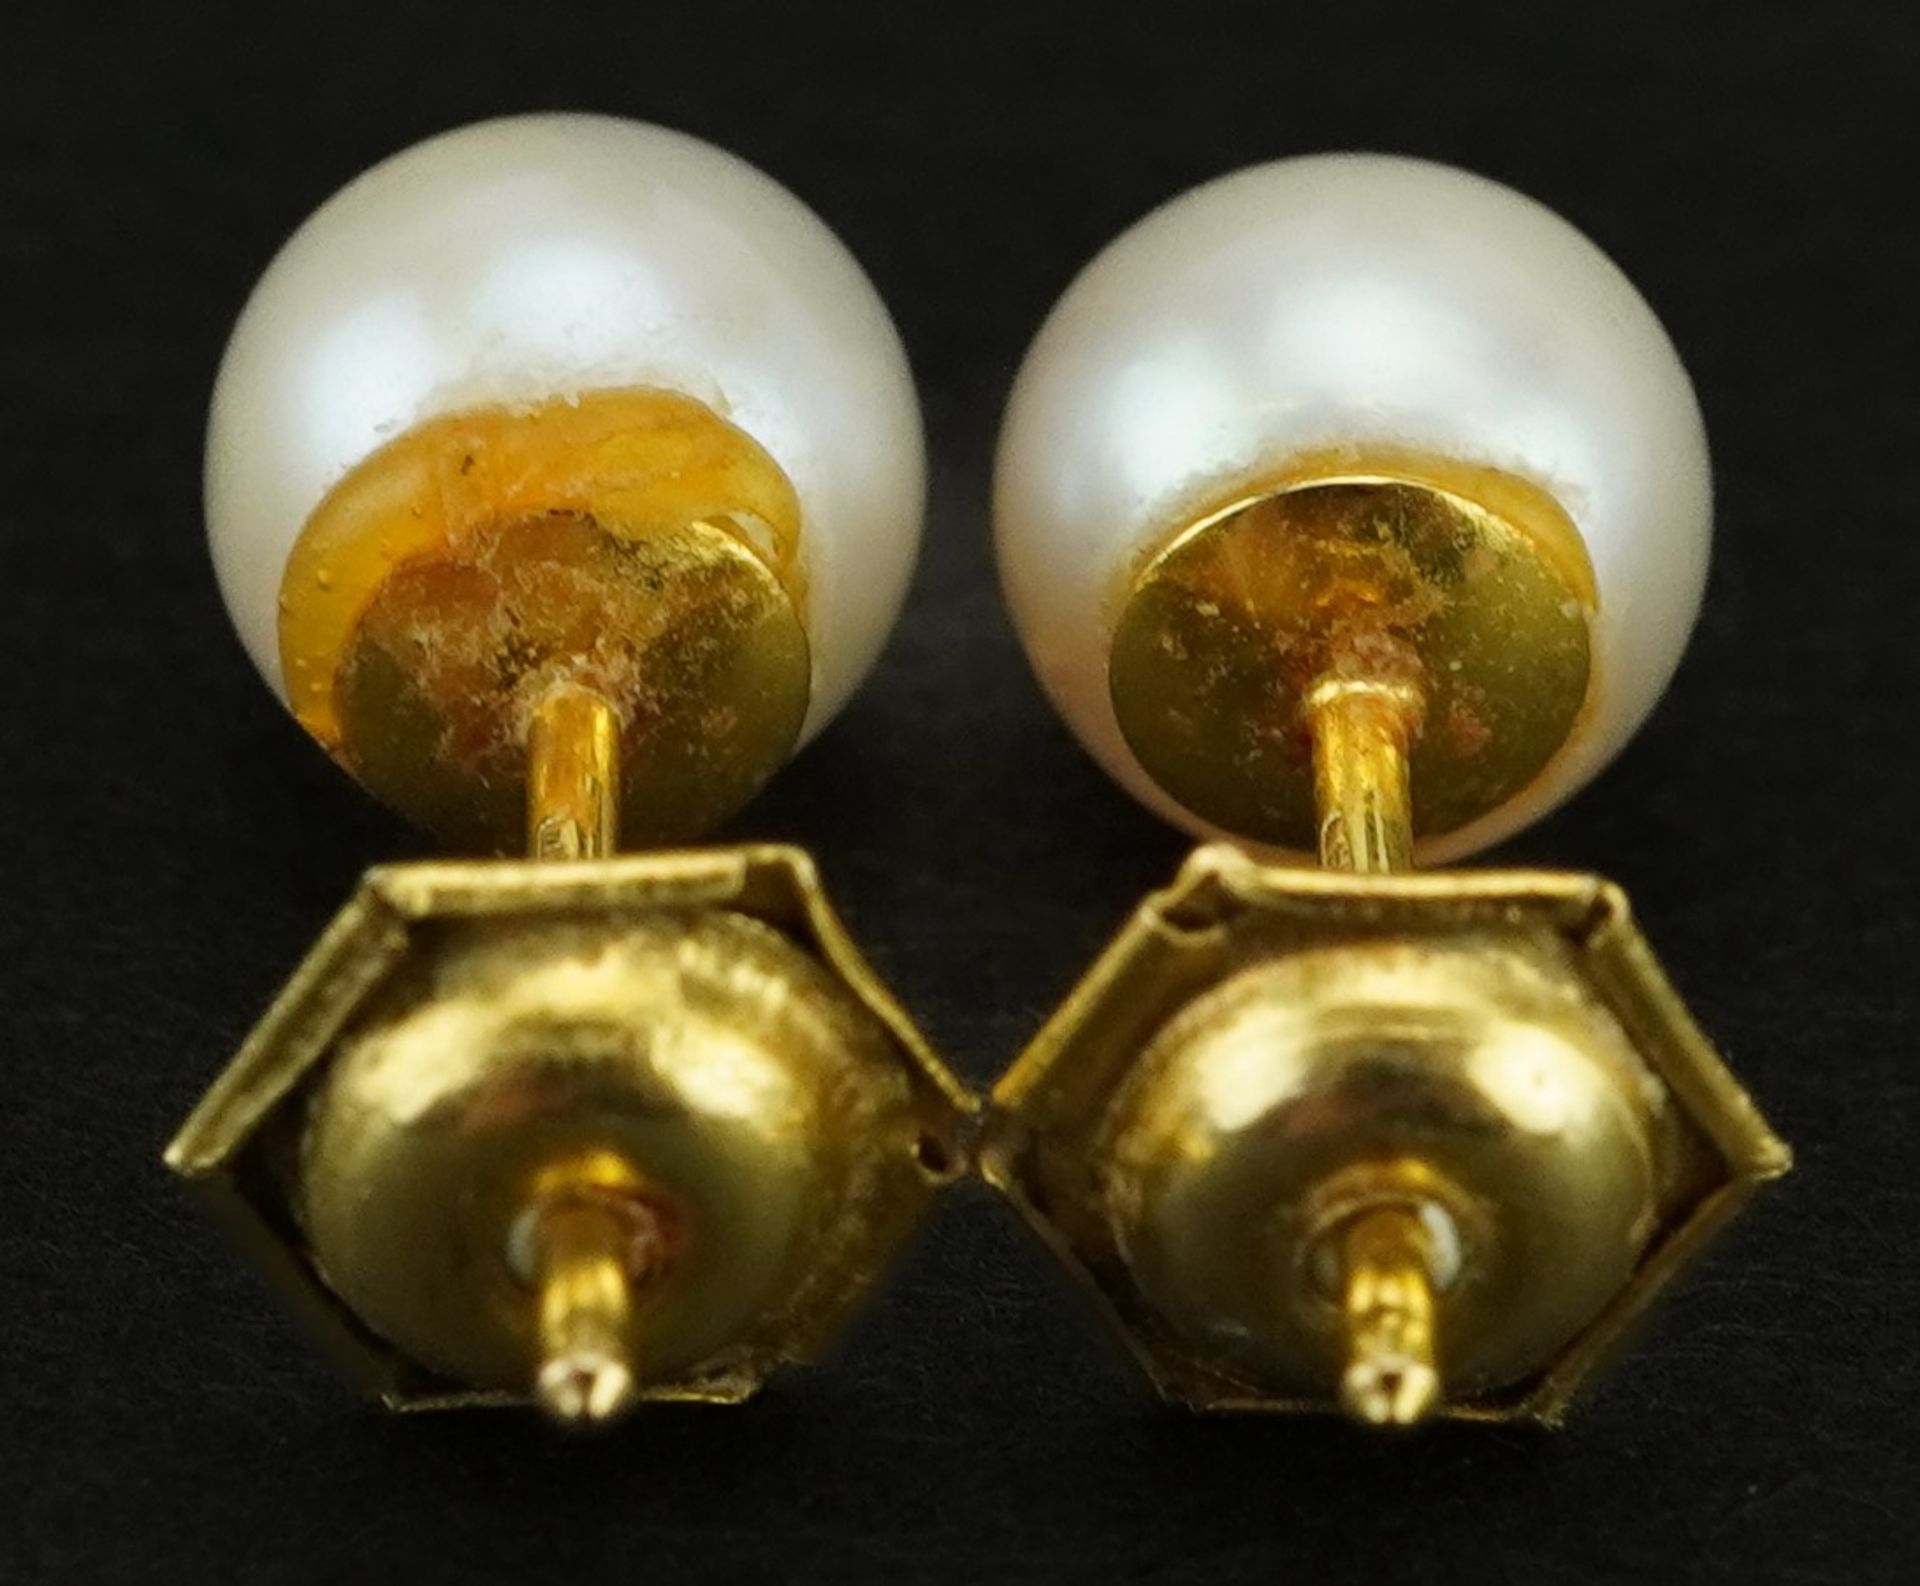 Pair of 9ct gold cultured pearl stud earrings, 7mm in diameter, 1.1g - Image 2 of 3